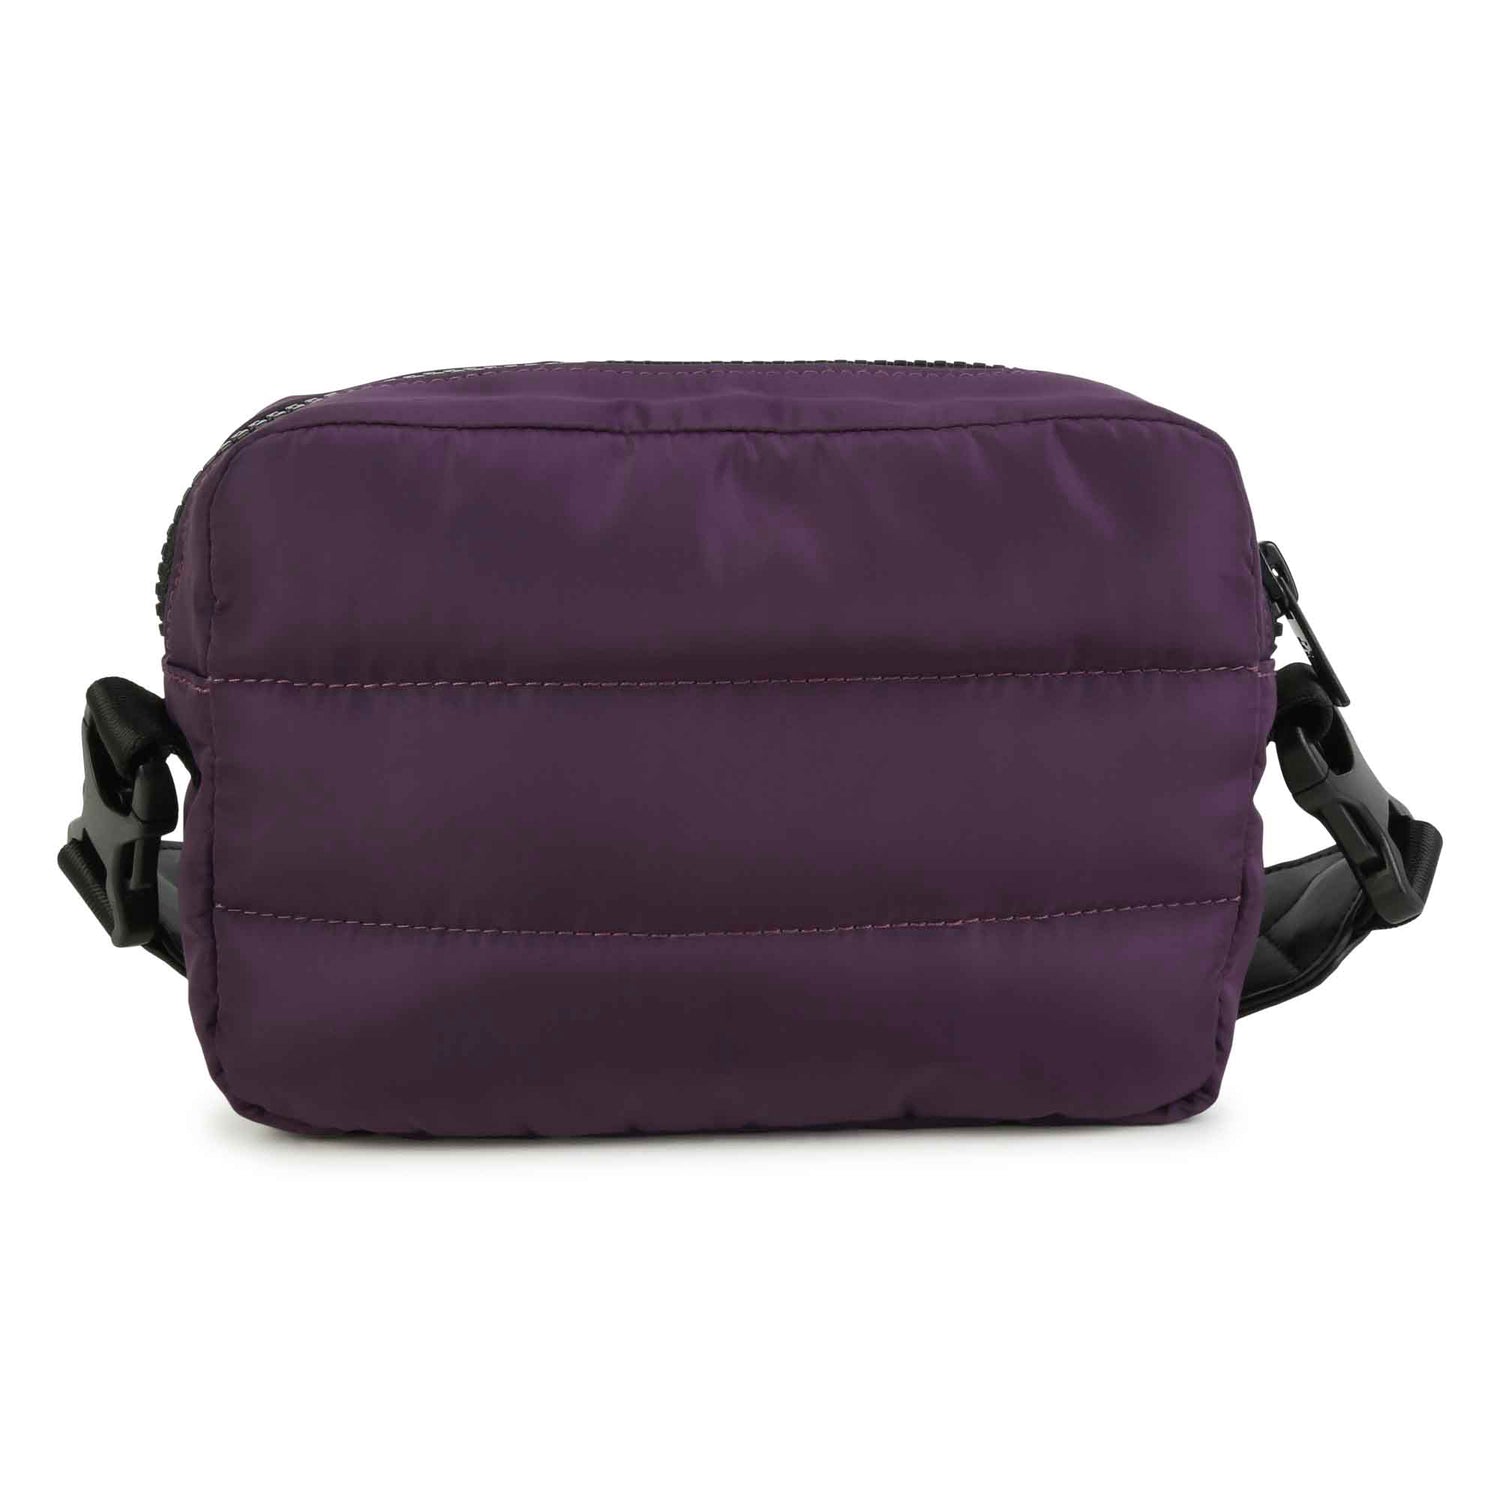 DKNY Violet Reversible Bi Color Handbag